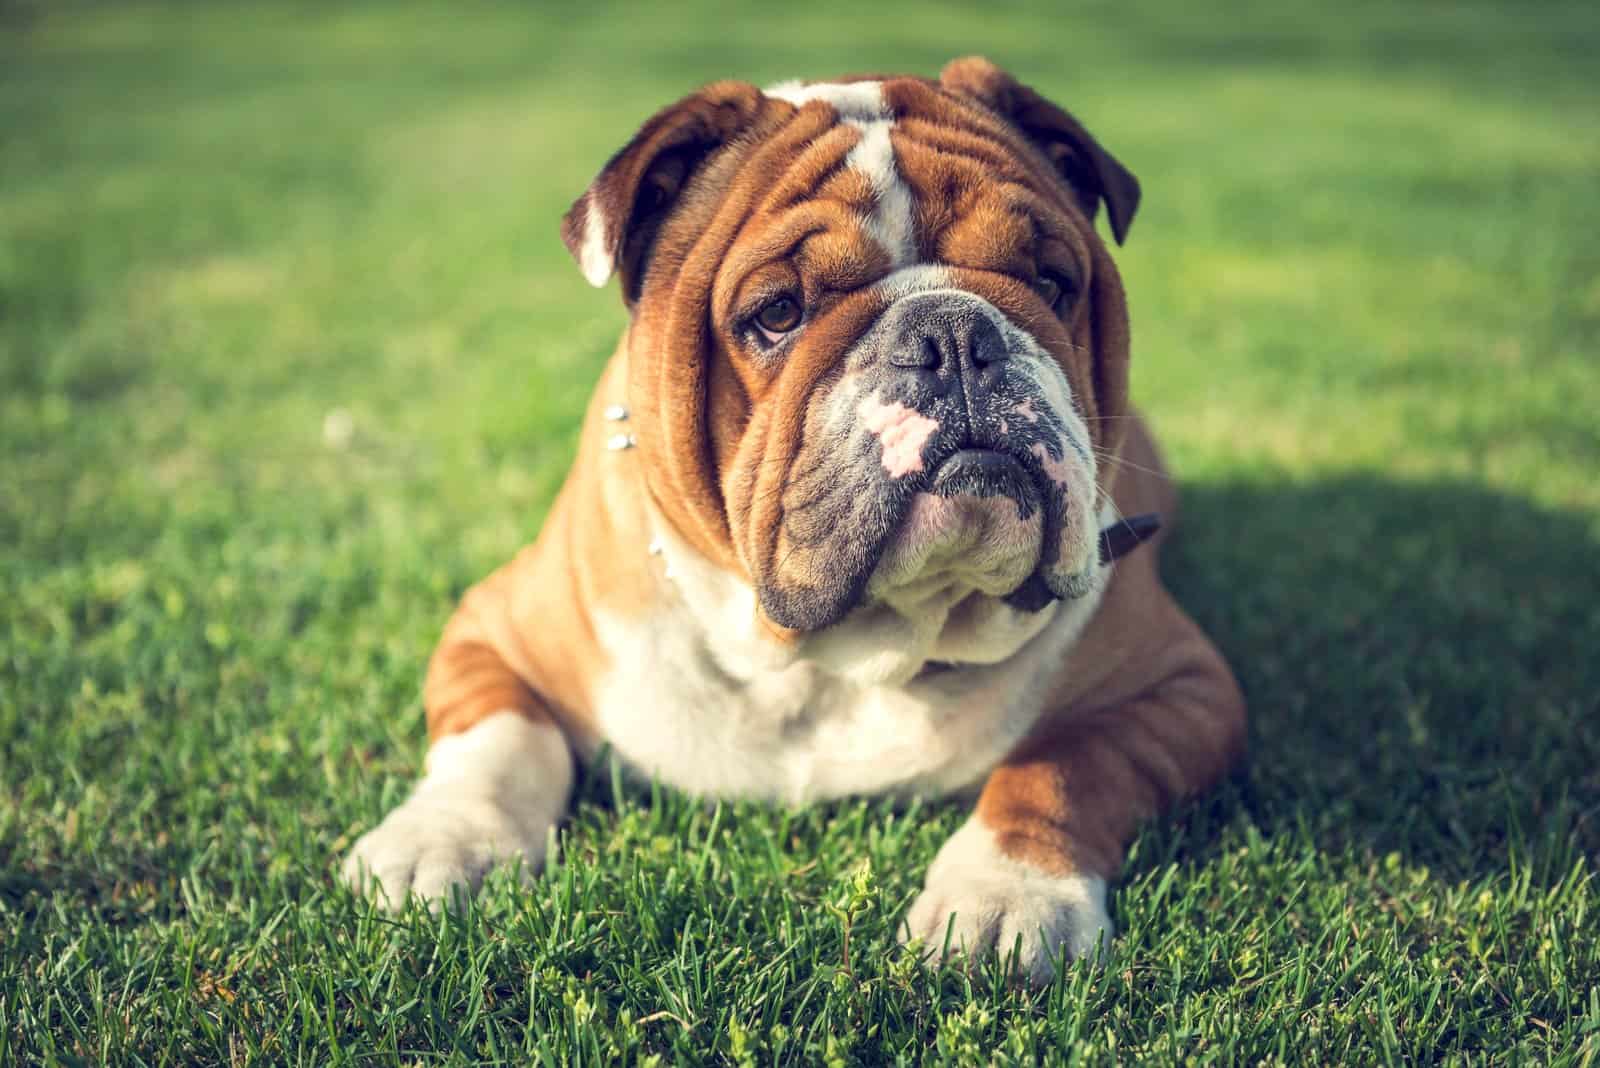 Cute English bulldog laying down on the grass